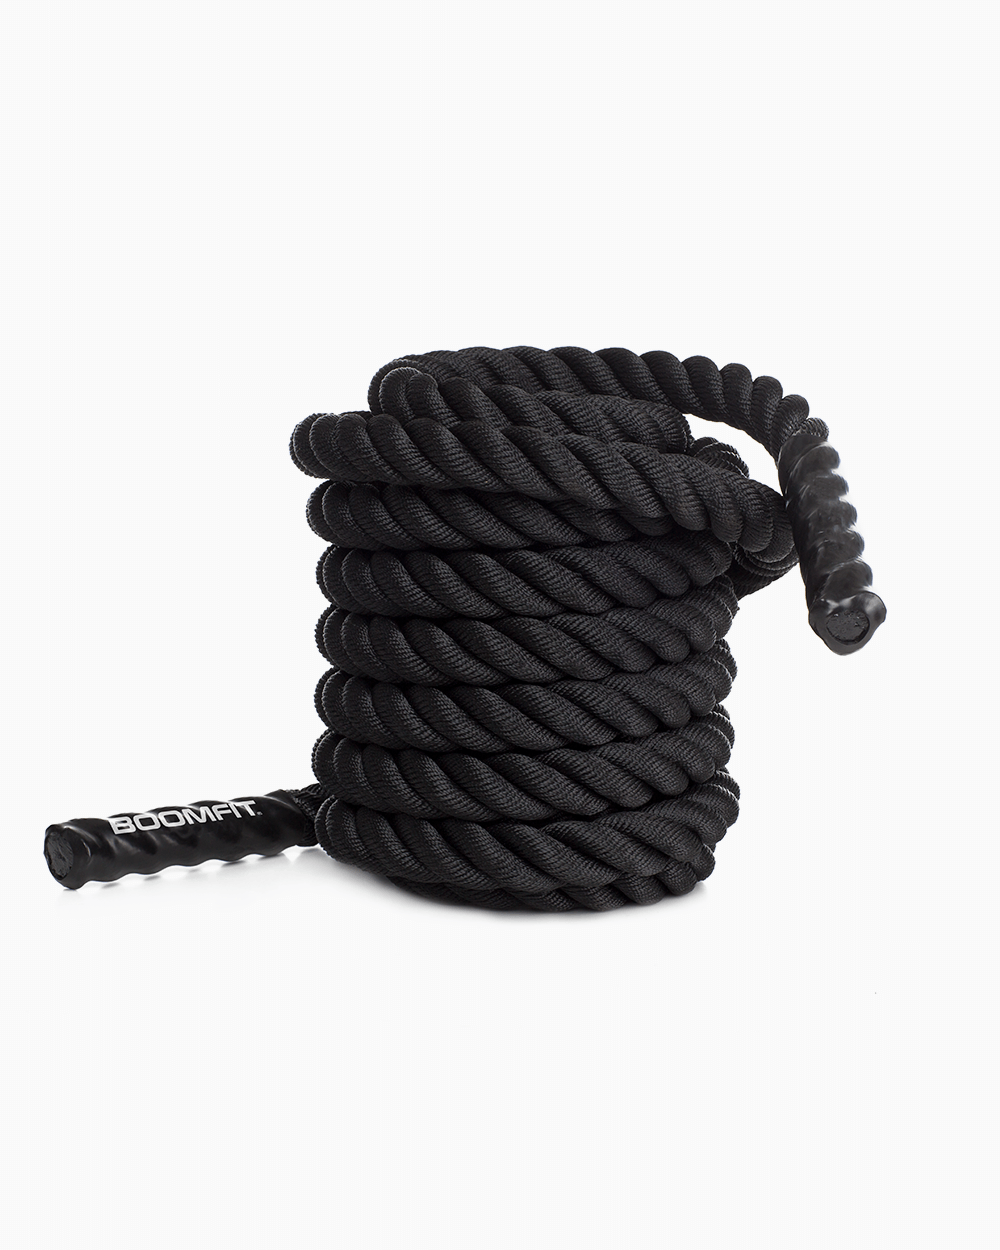 Cuerda para crossfit battle rope 1.5'' y 2'' - 9mt - ALPHA GYM STORE